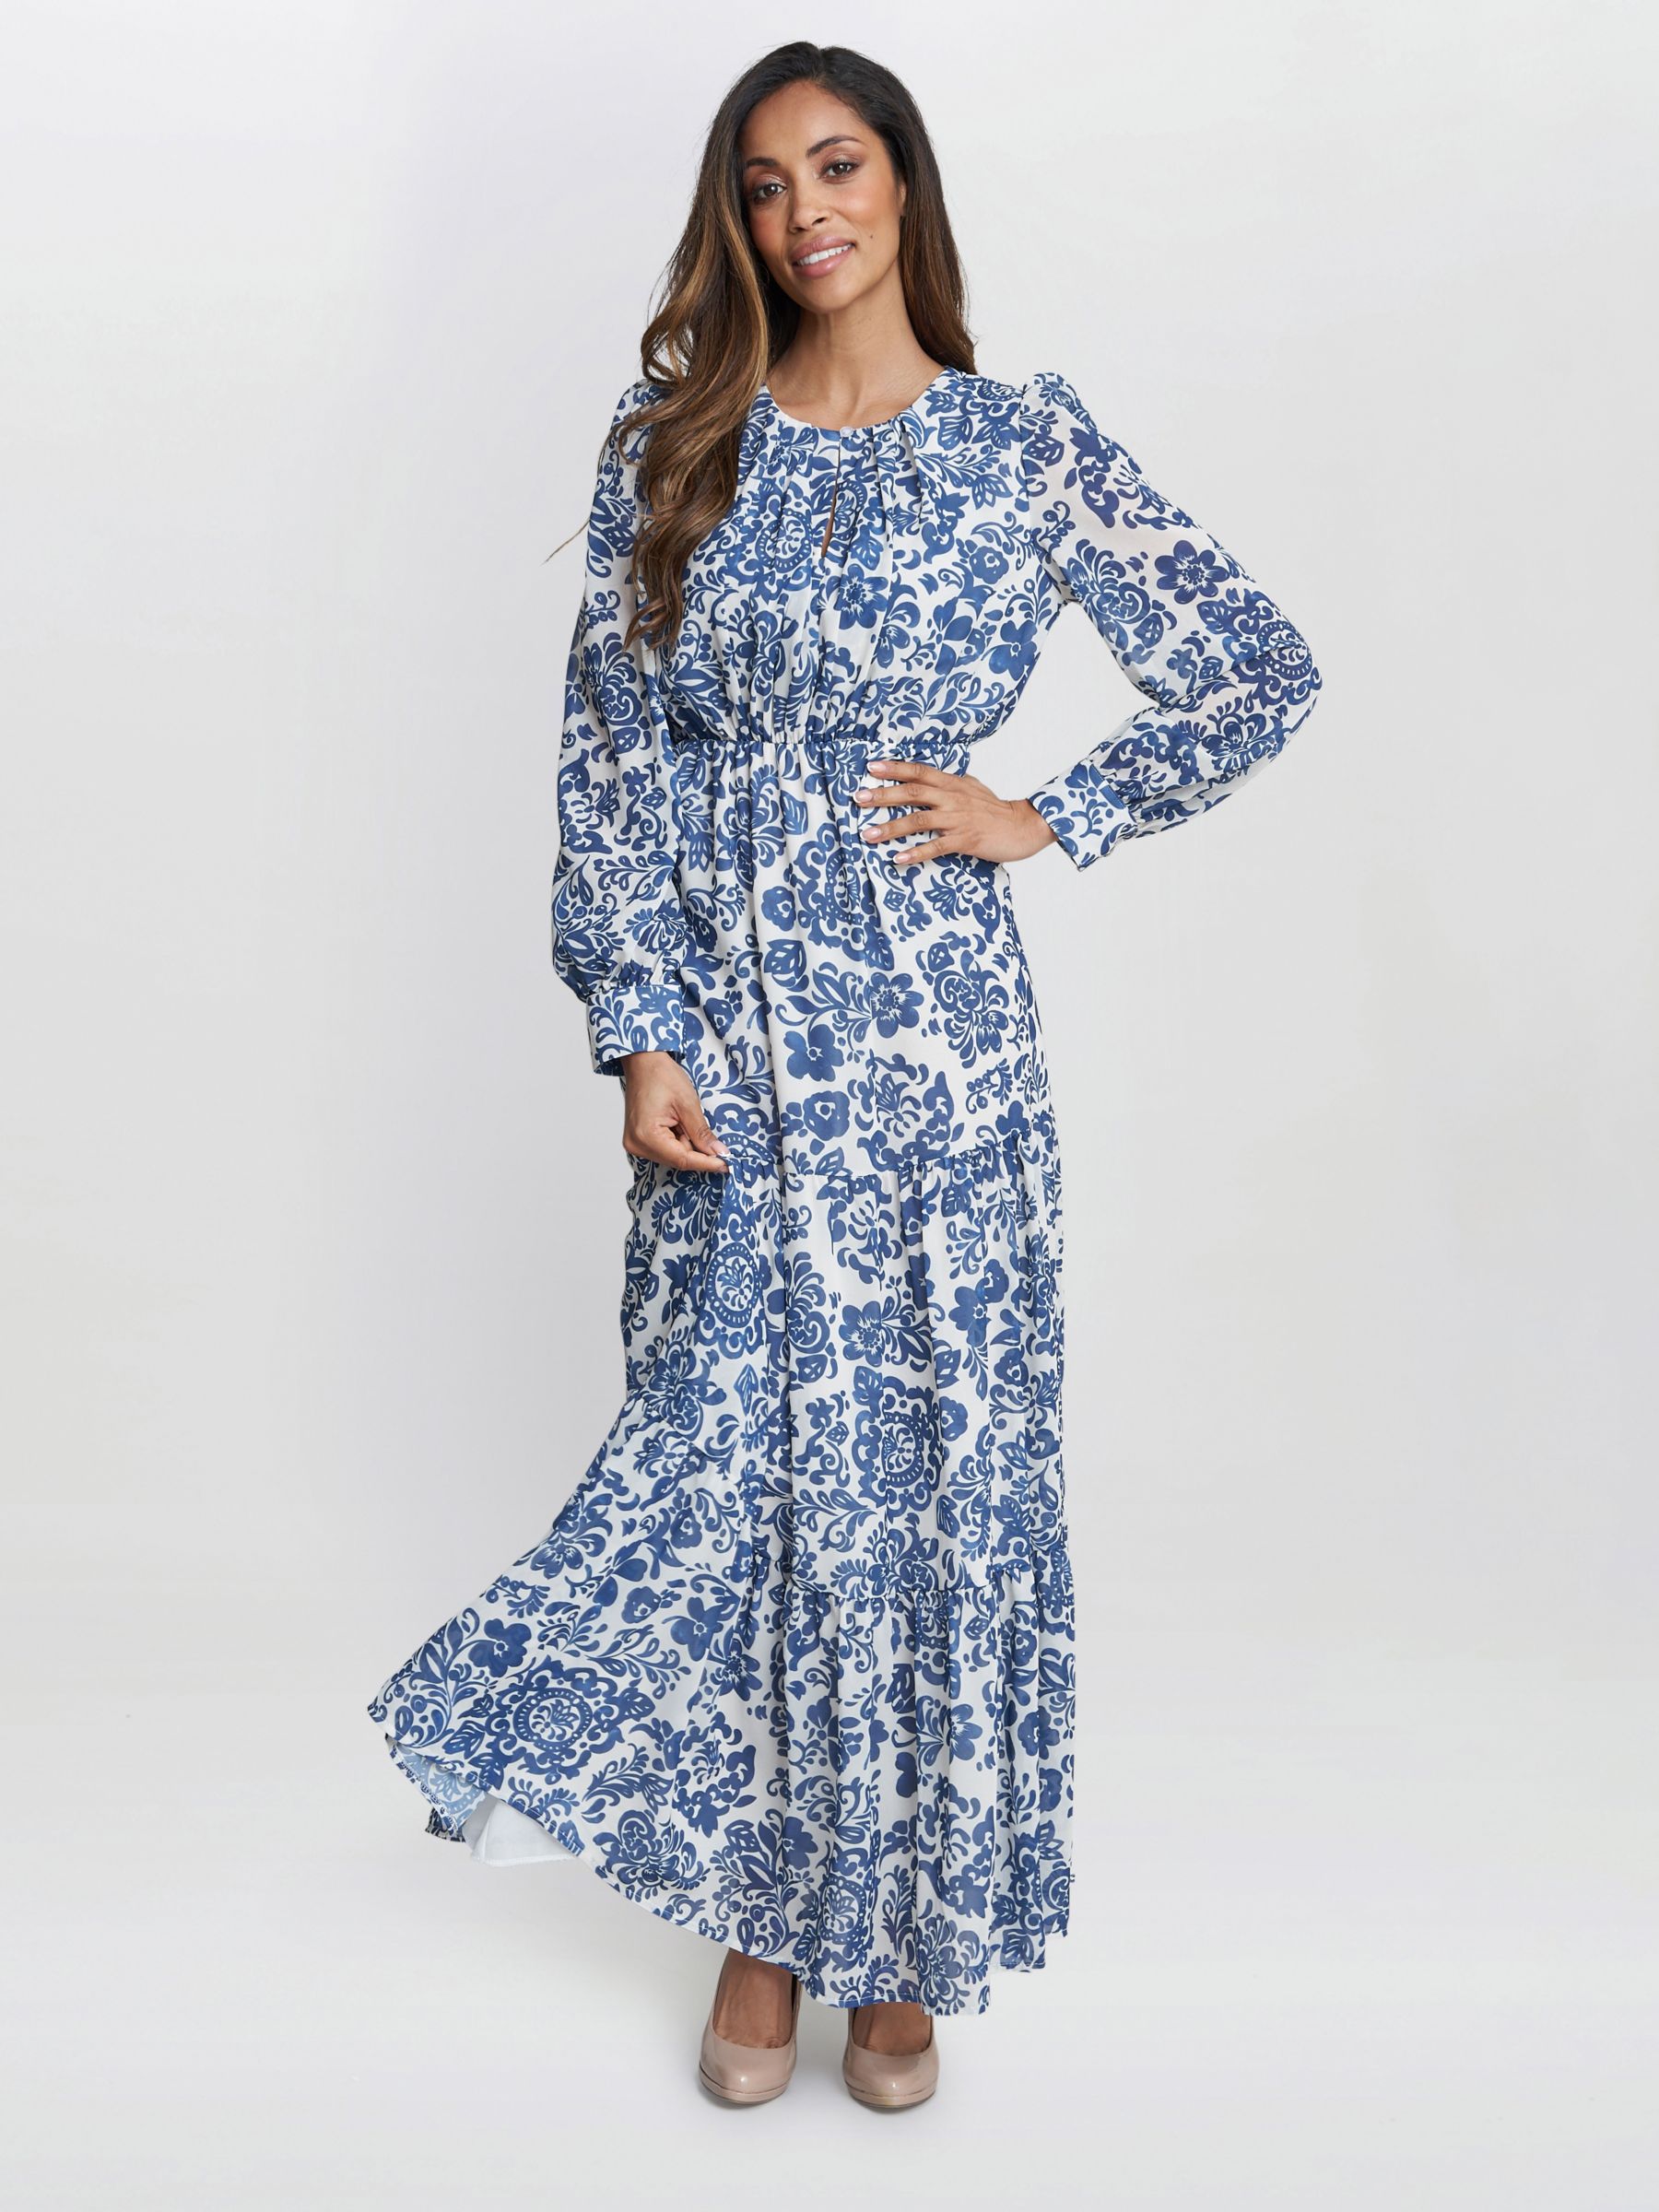 Gina Bacconi Jojo Tiered Floral Maxi Dress, Navy/Cream, S